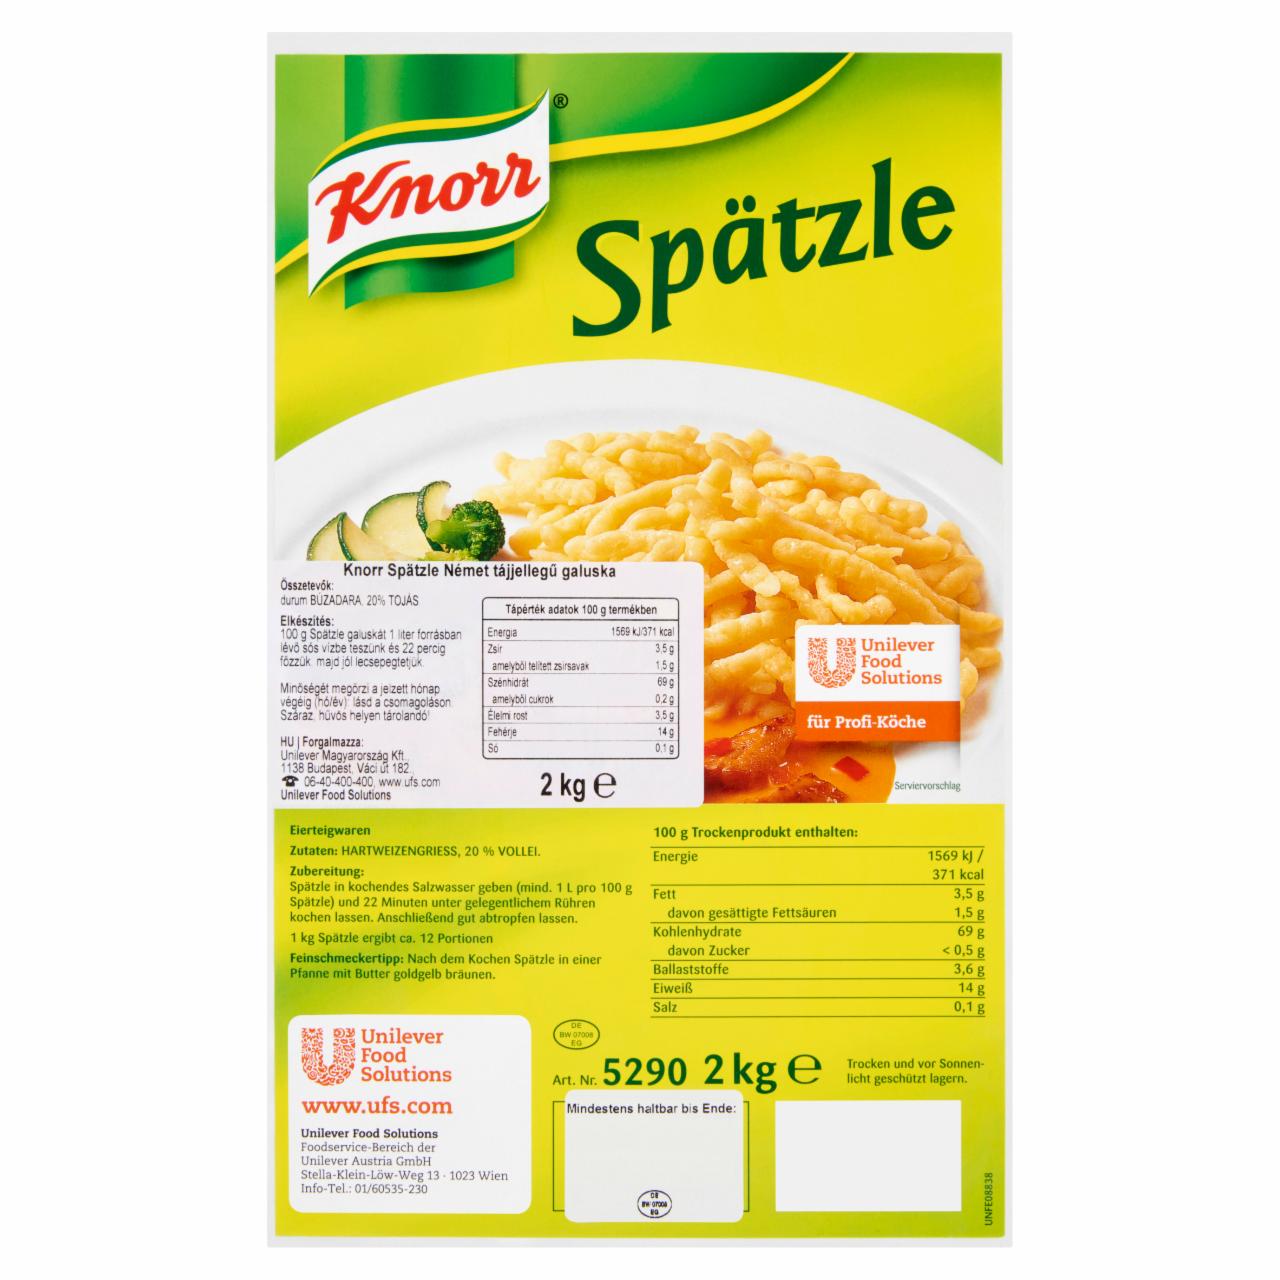 Képek - Knorr Spätzle német tájjellegű galuska 2 kg